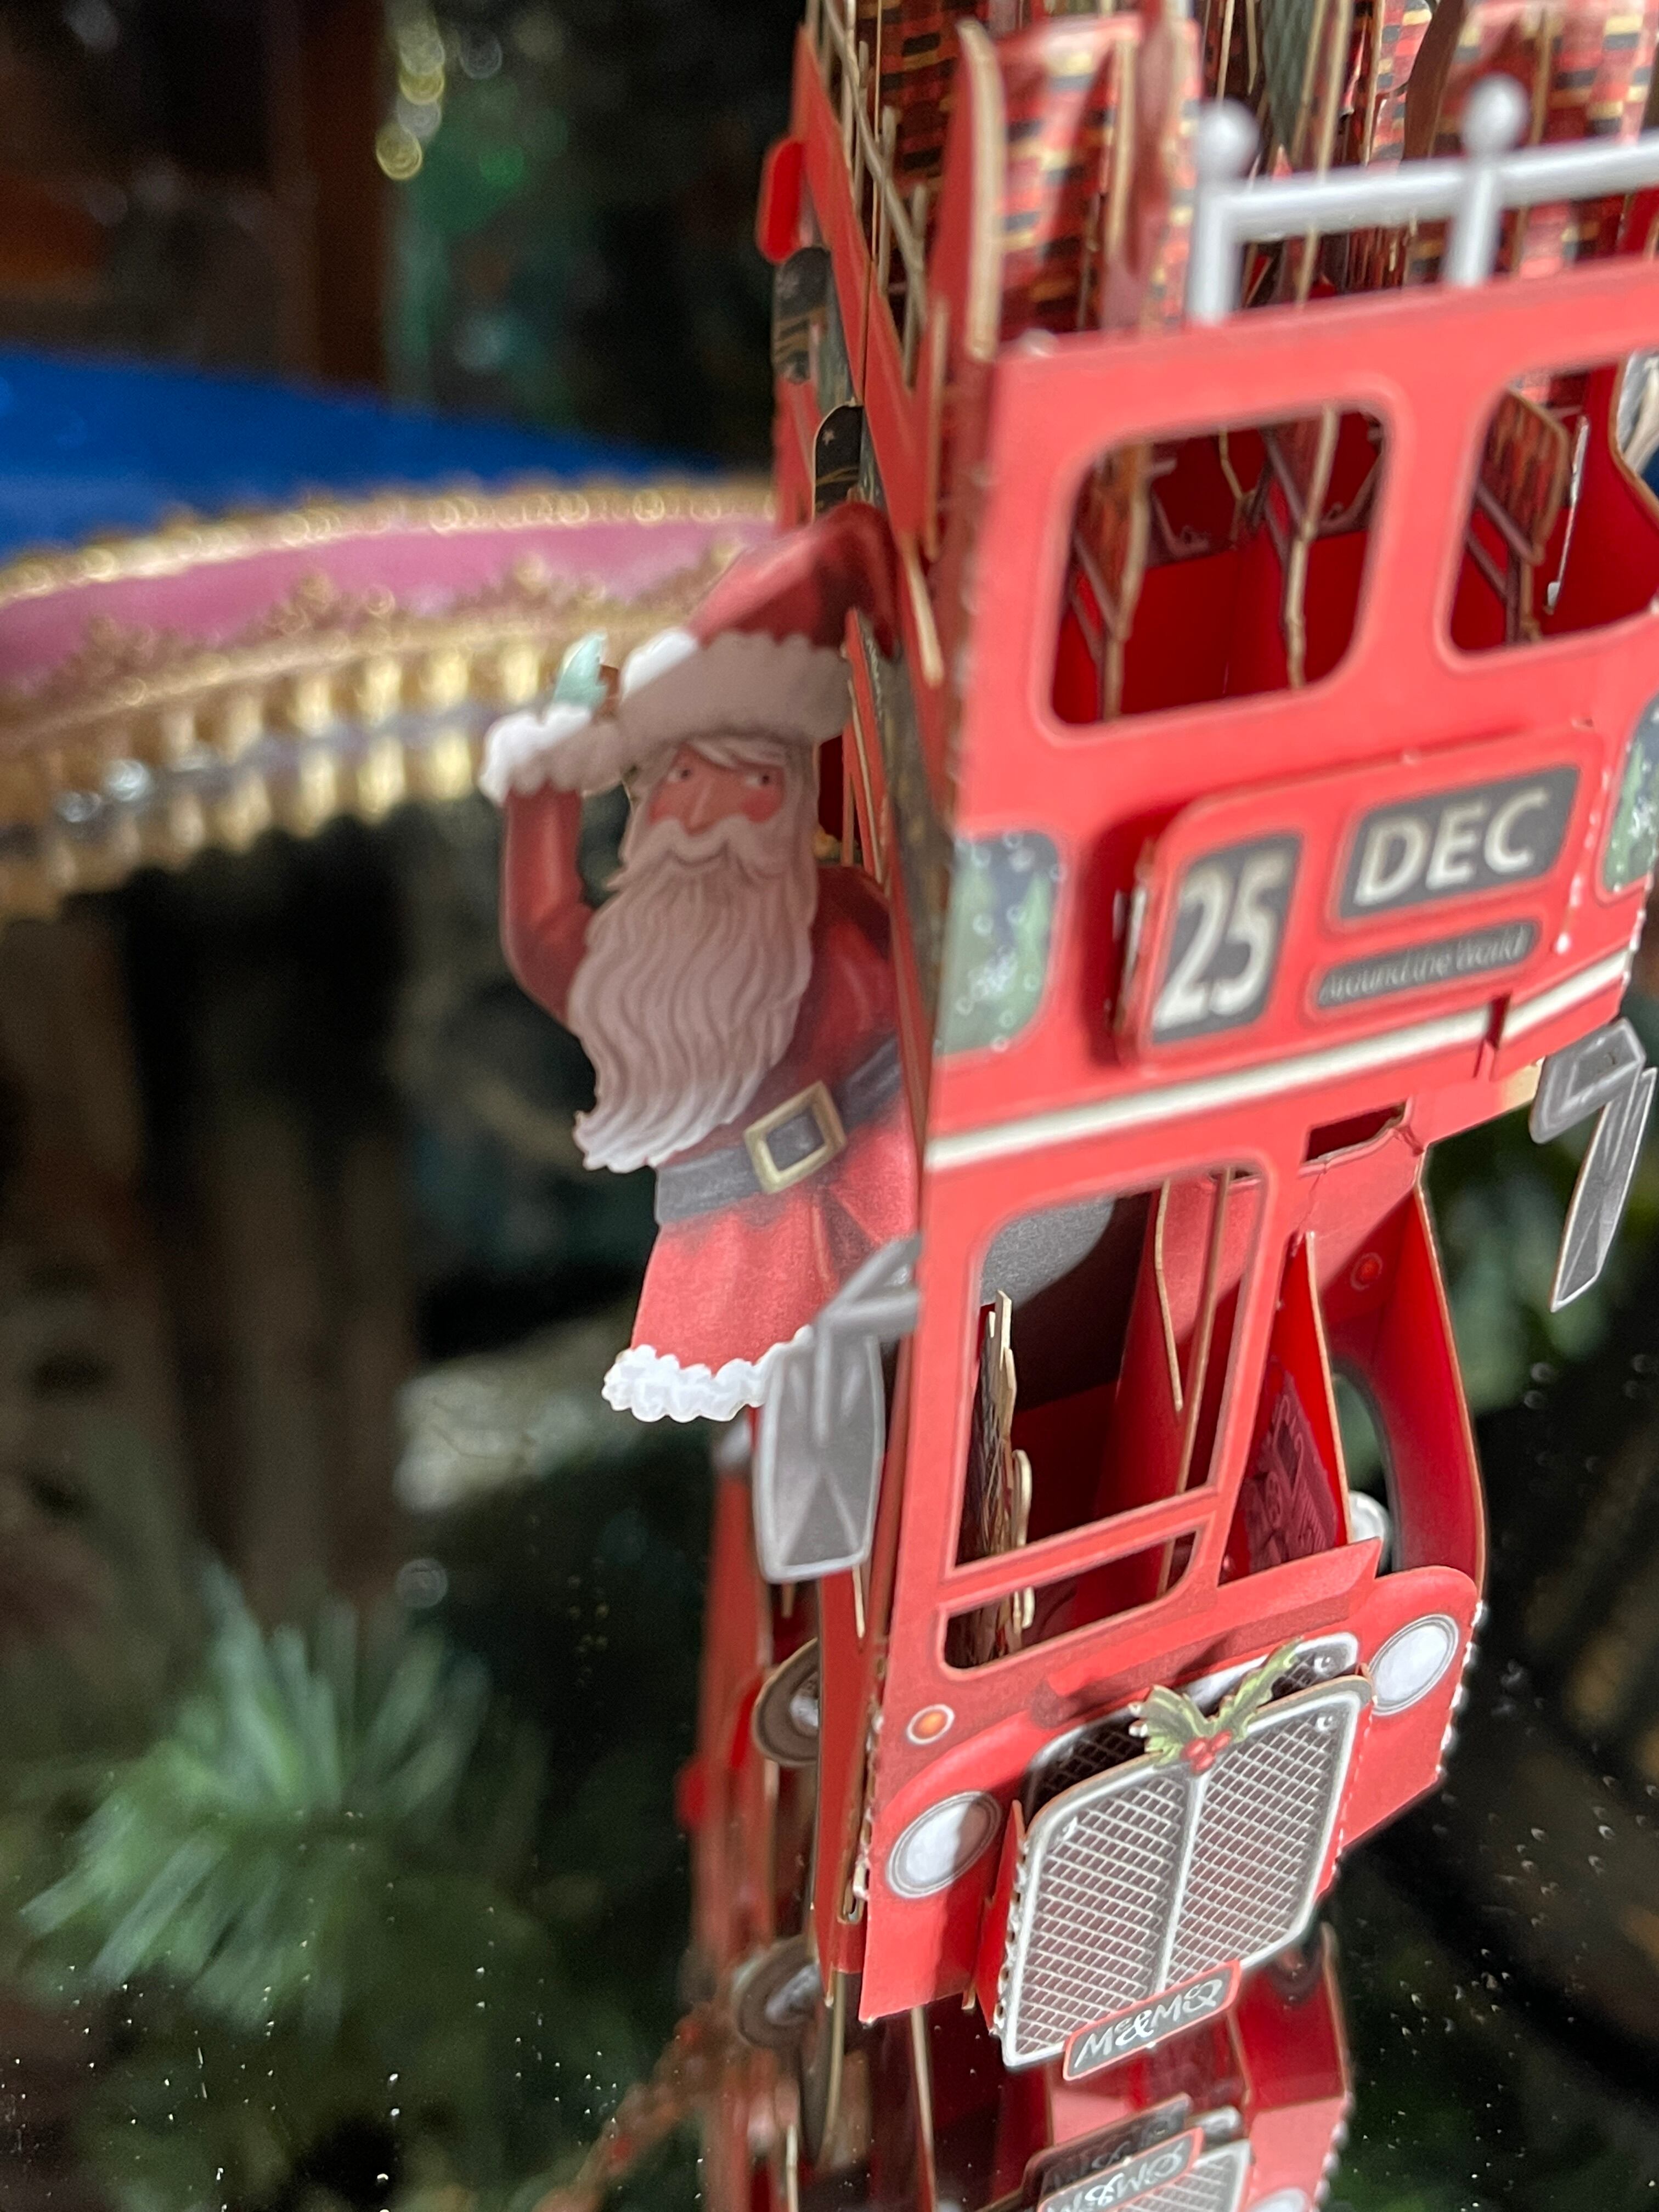 『Me & McQ』サンタとダブルデッカー Santa’s Bus 3D Christmas Cardイギリスより